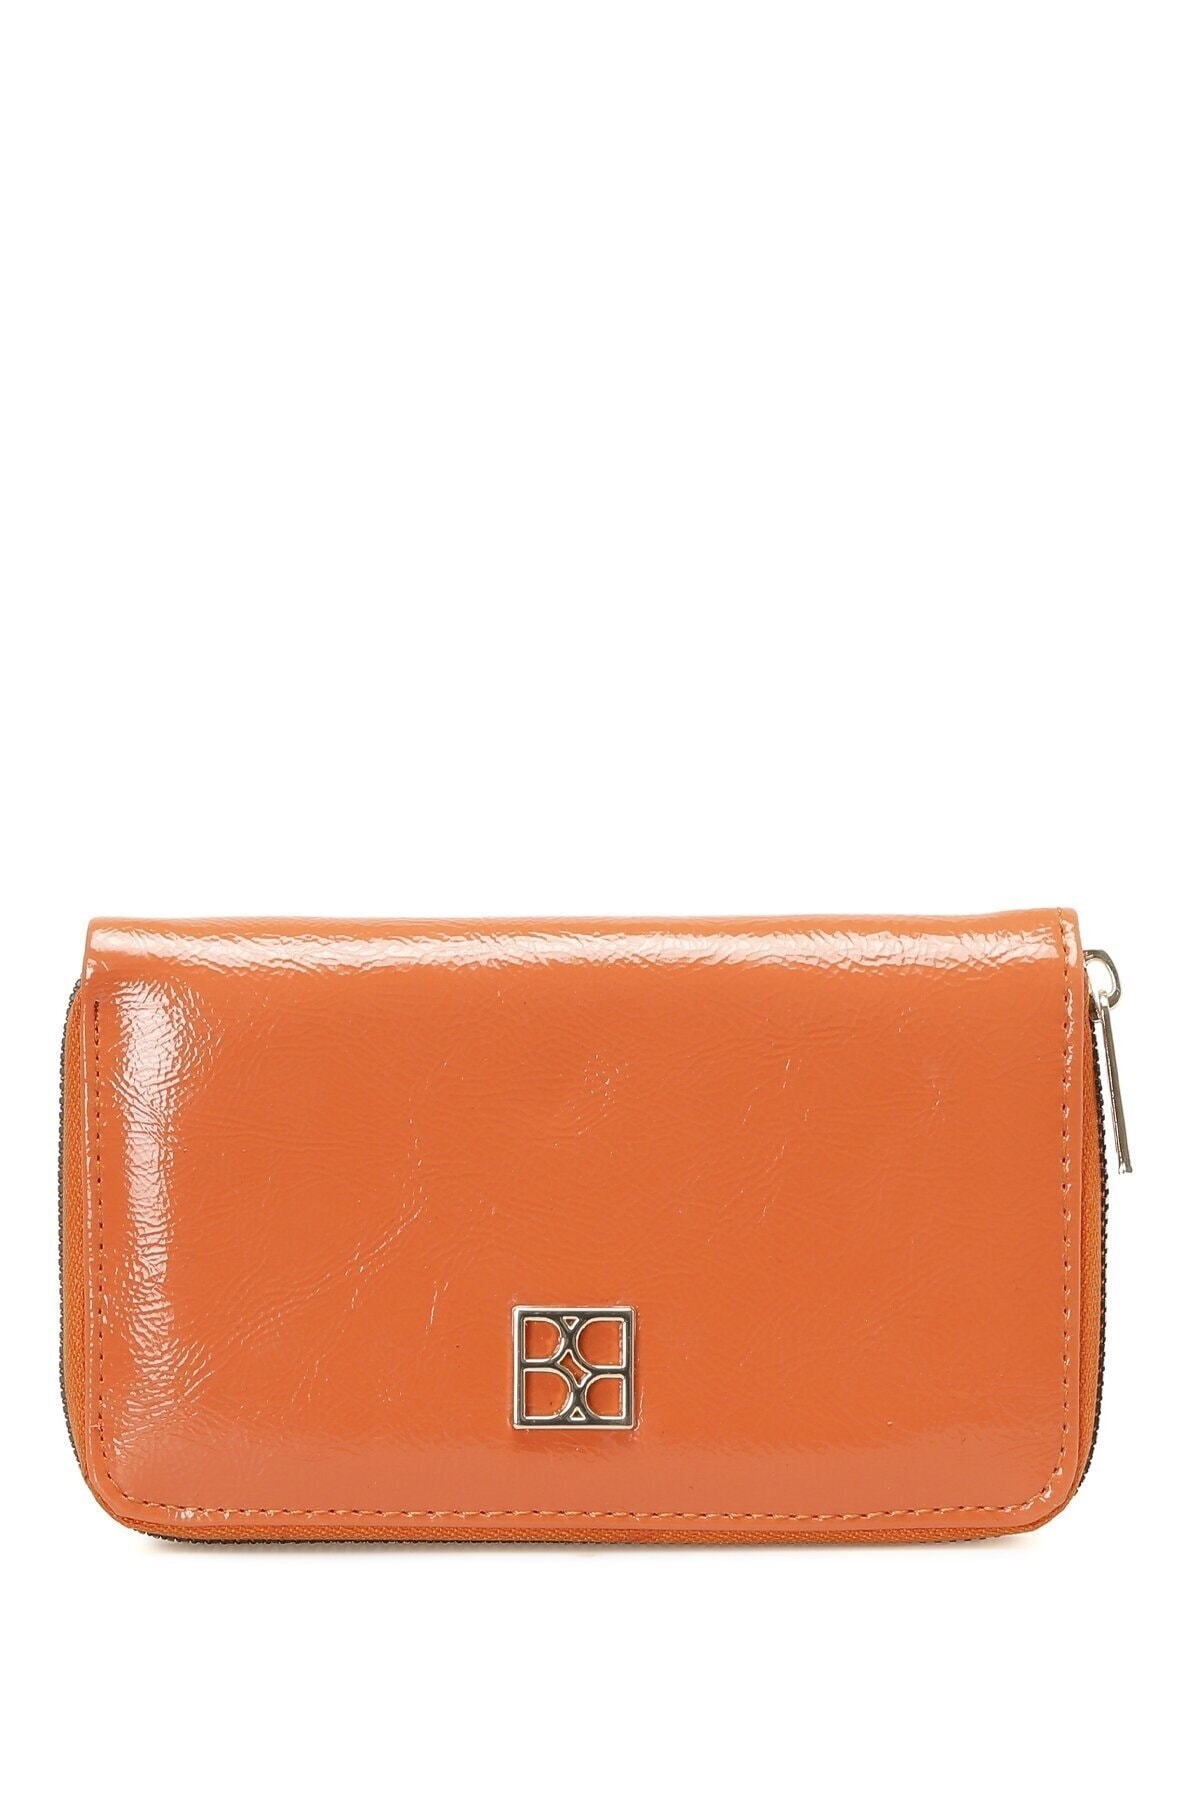 Levně Butigo Patent Leather LUX CZDN 3PR Women's Wallet Orange